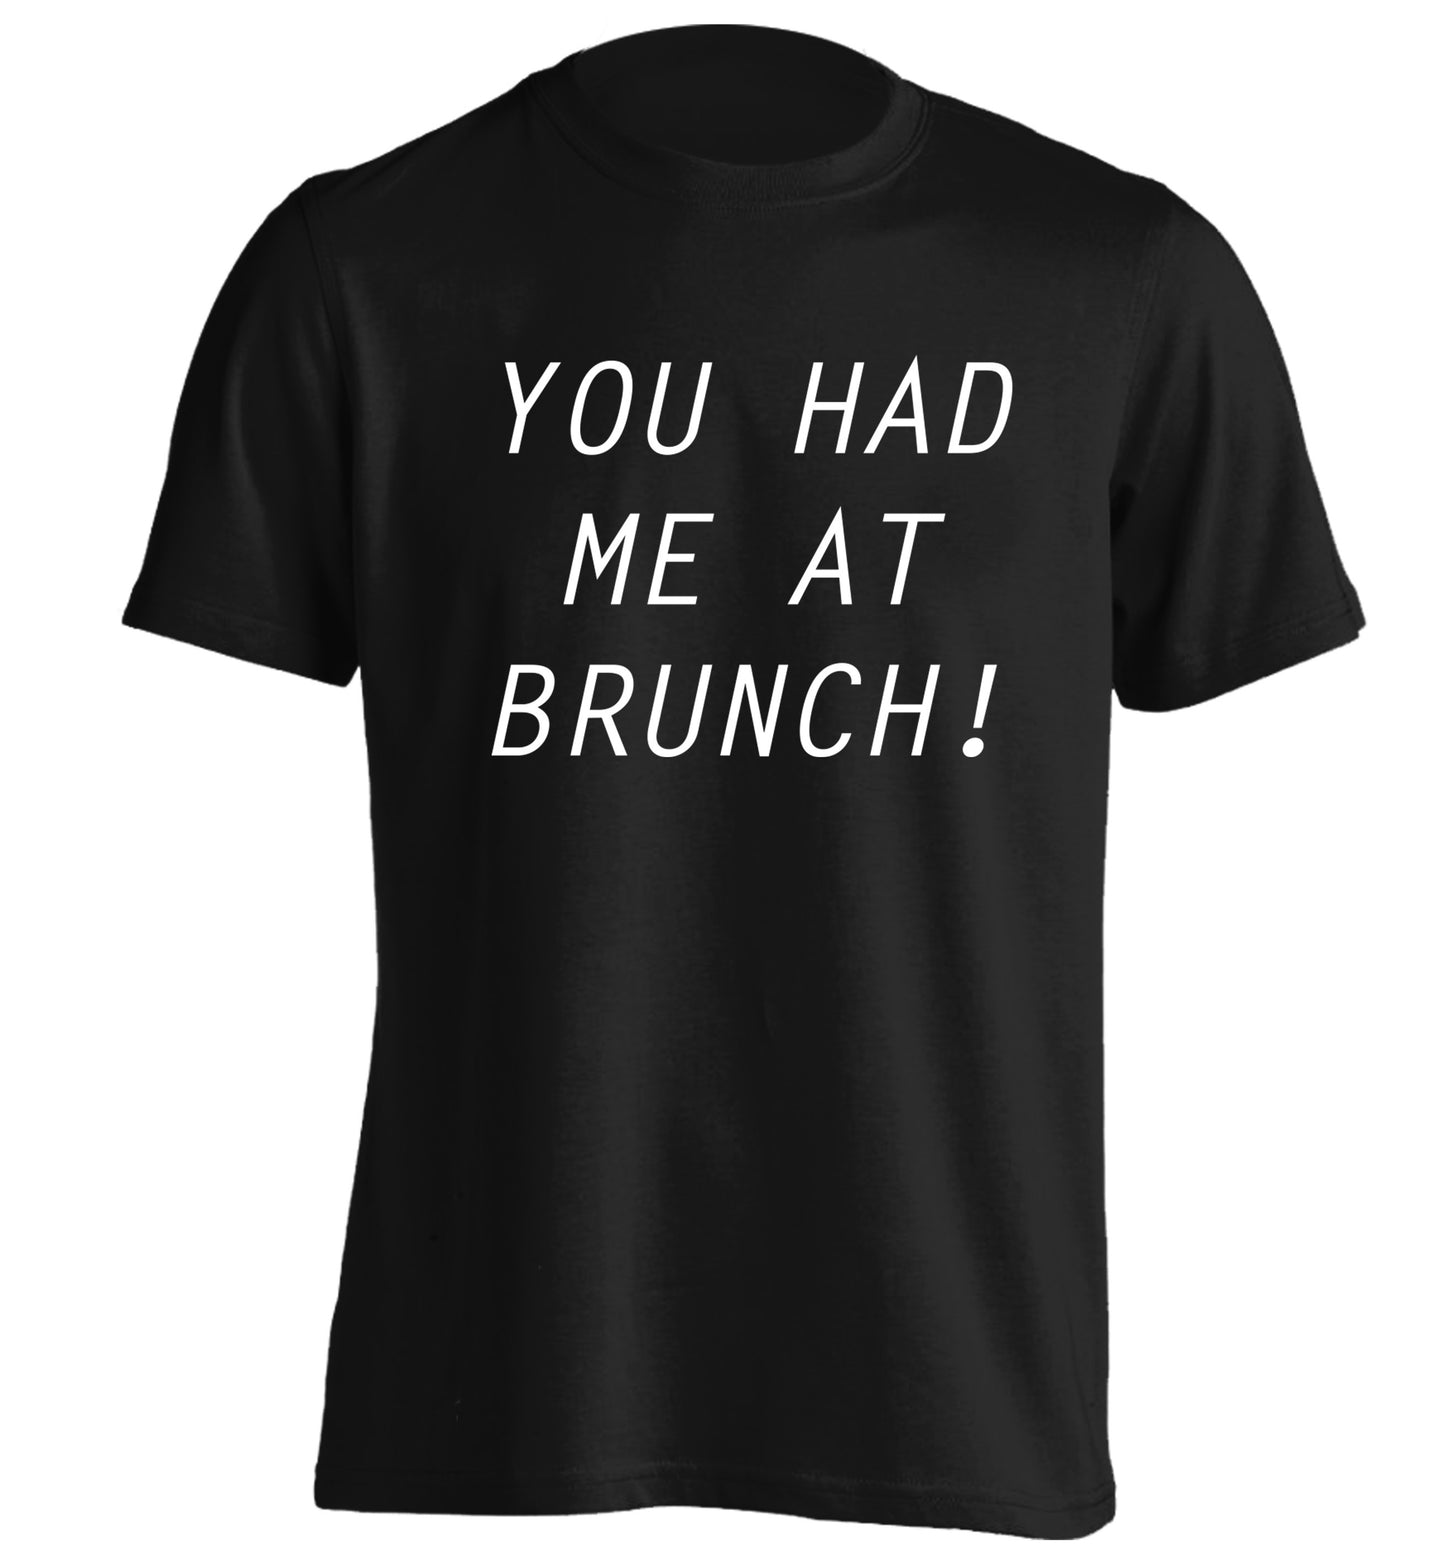 You had me at brunch adults unisex black Tshirt 2XL